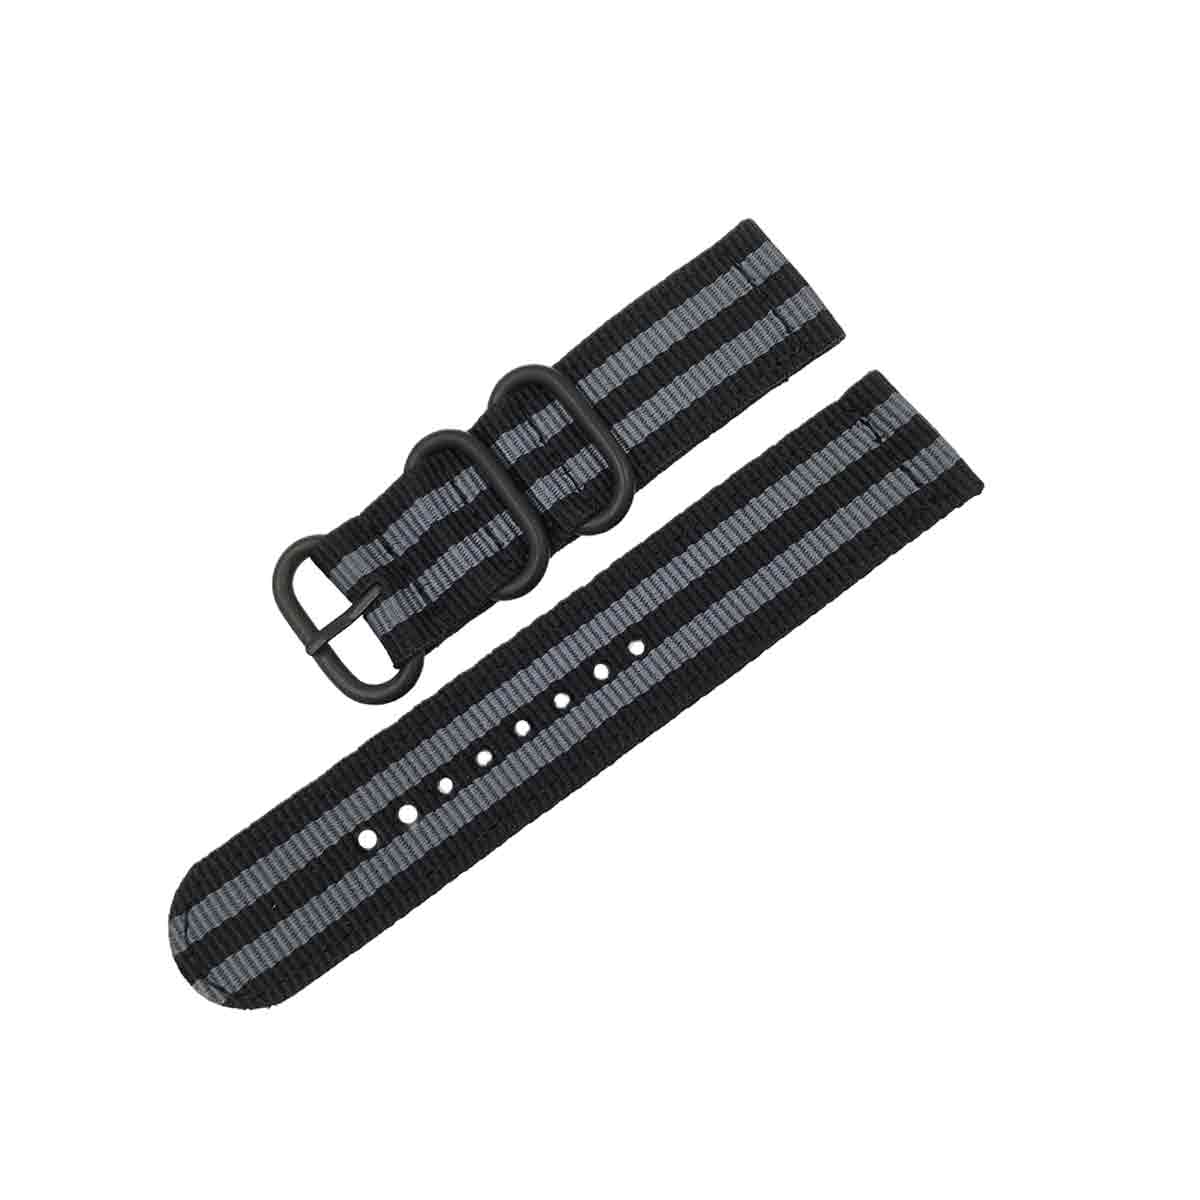 NATO Garmin Fenix 5S & 5S Plus Replacement Bands (20mm) Black + Grey Stripe  